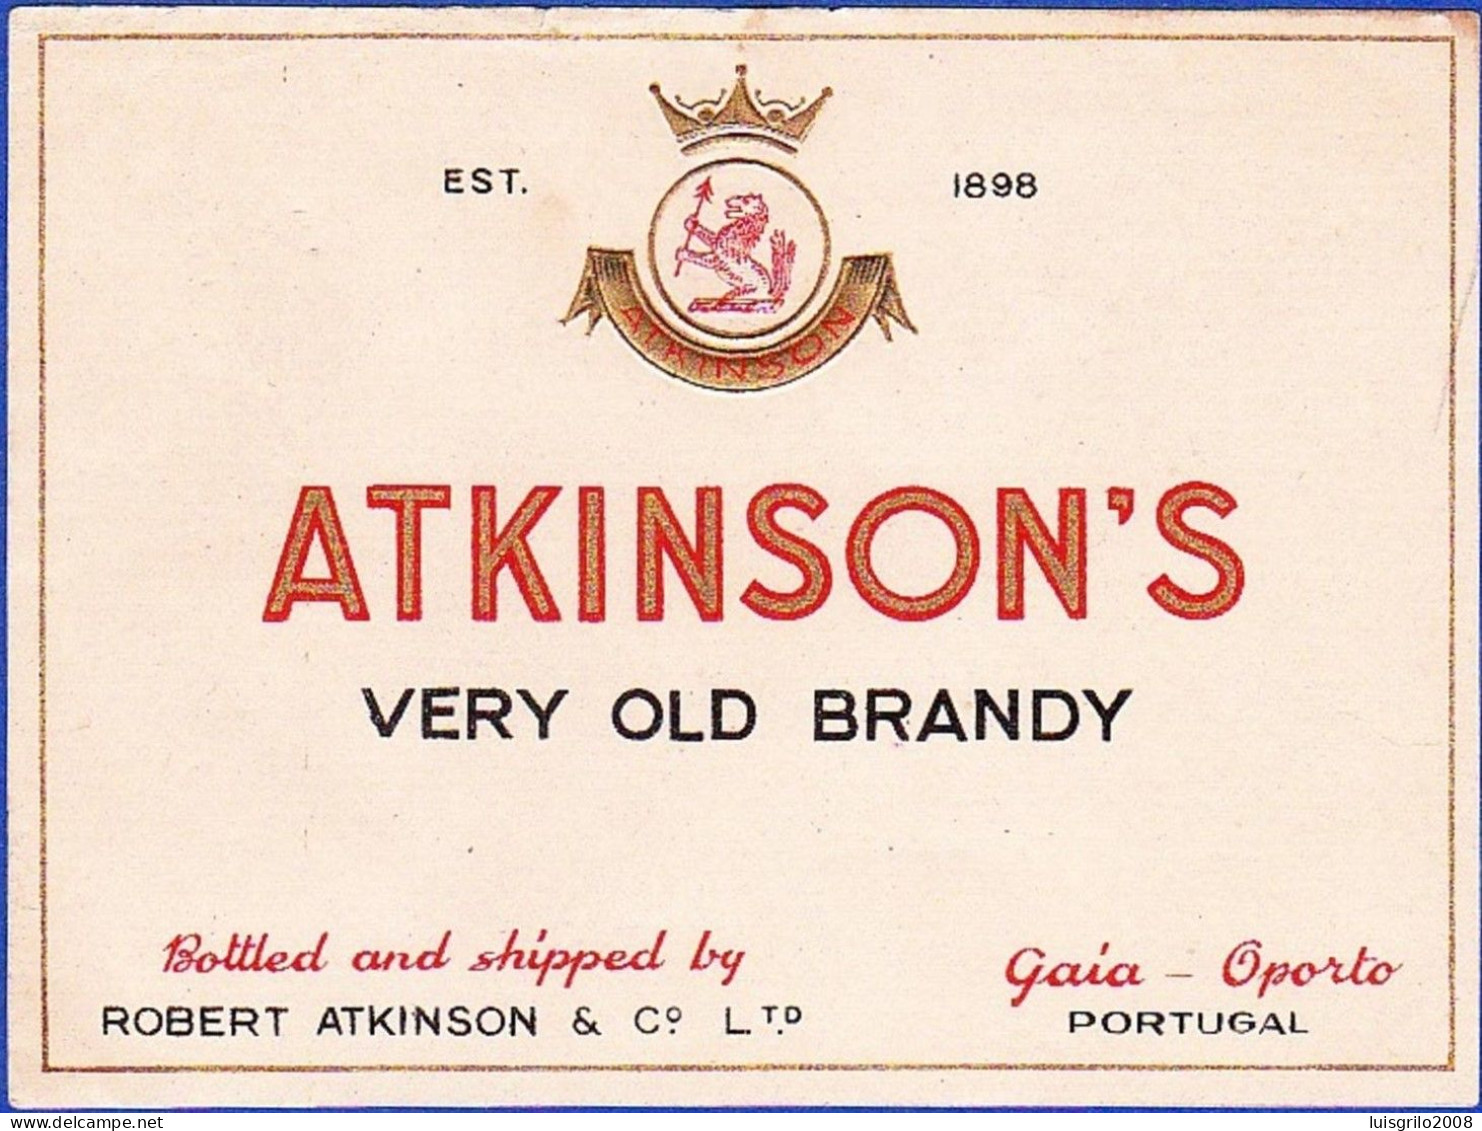 Brandy Label, Portugal - ATKINSON'S Very Old Brandy -|- Robert Atkinson. Gaia, Oporto - Alkohole & Spirituosen